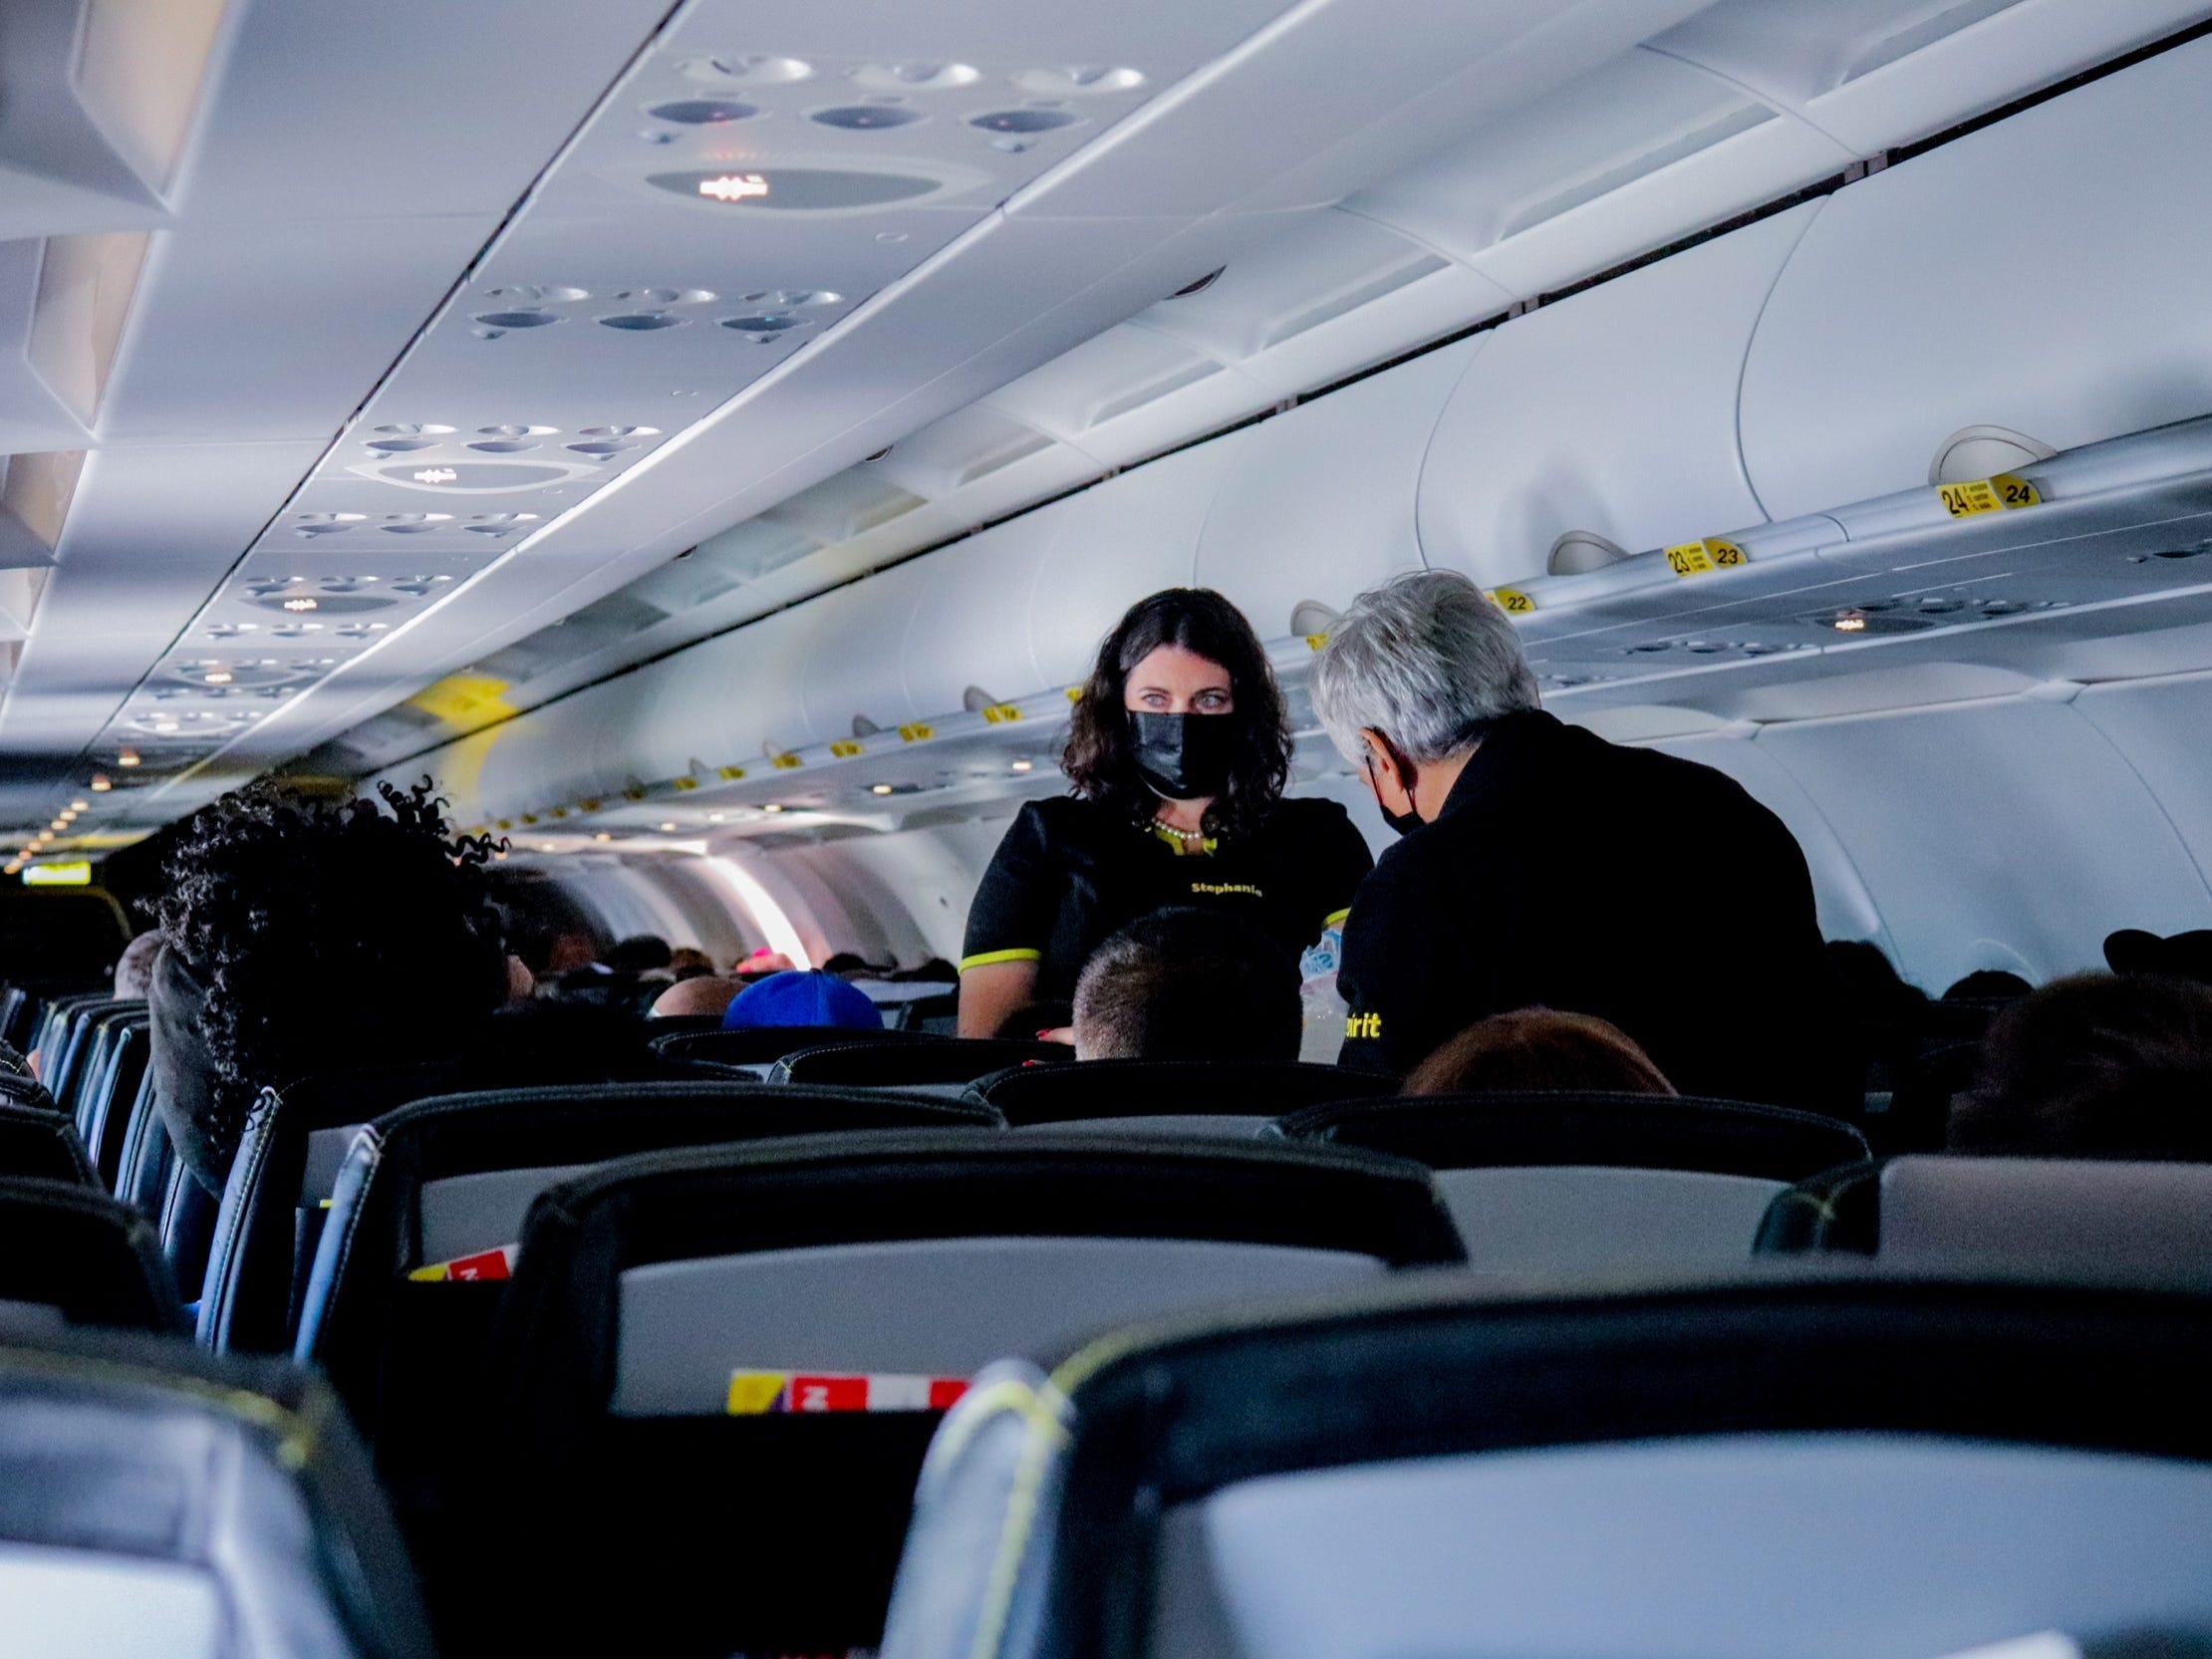 Flying Spirit Airlines across the US - Spirit Airlines Flight 2021